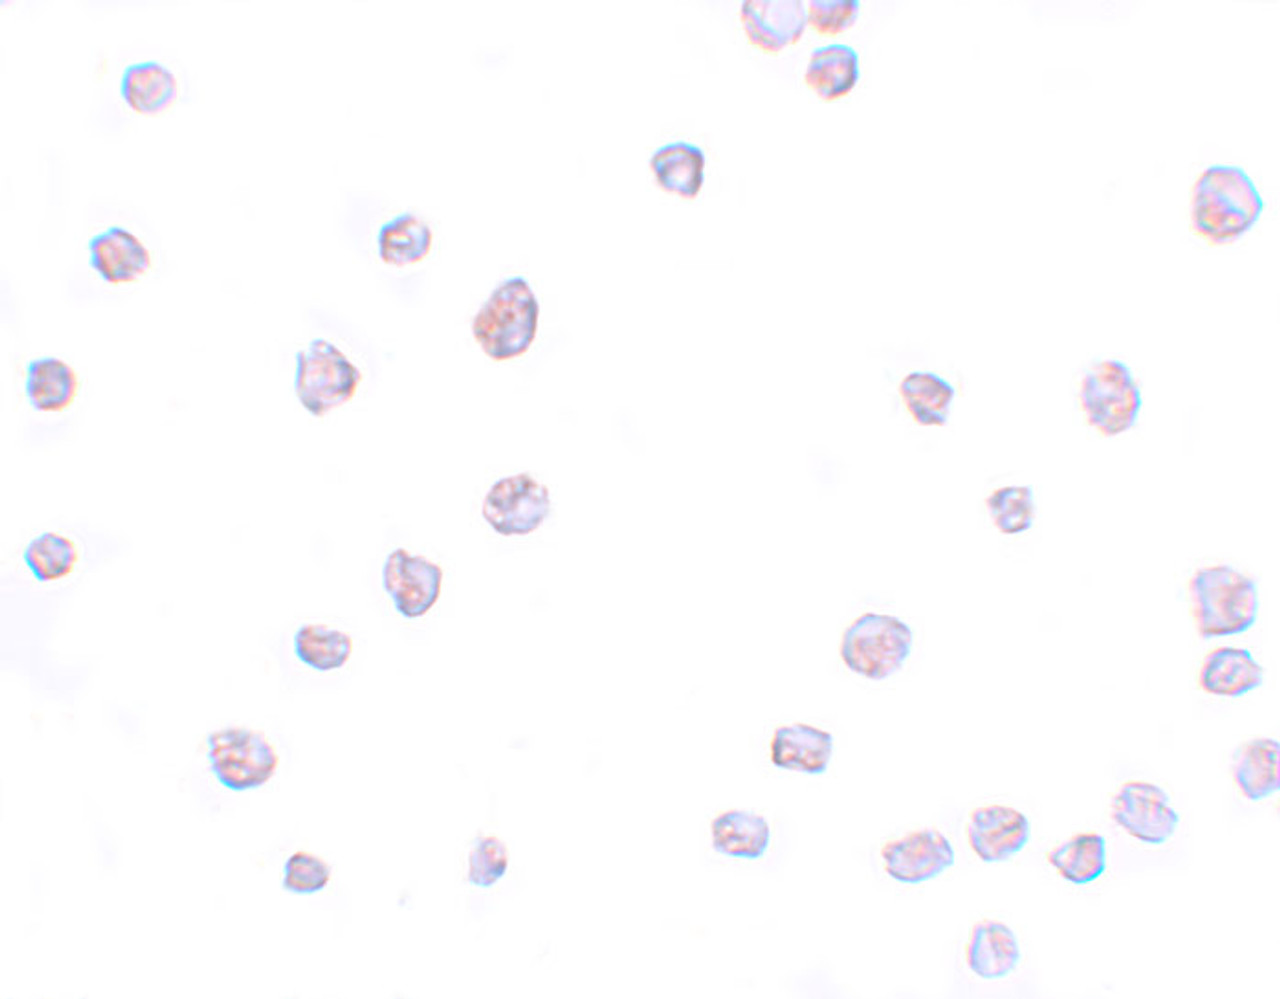 Immunocytochemistry of SCRN3 in 293 cells with SCRN3 antibody at 20 ug/mL.